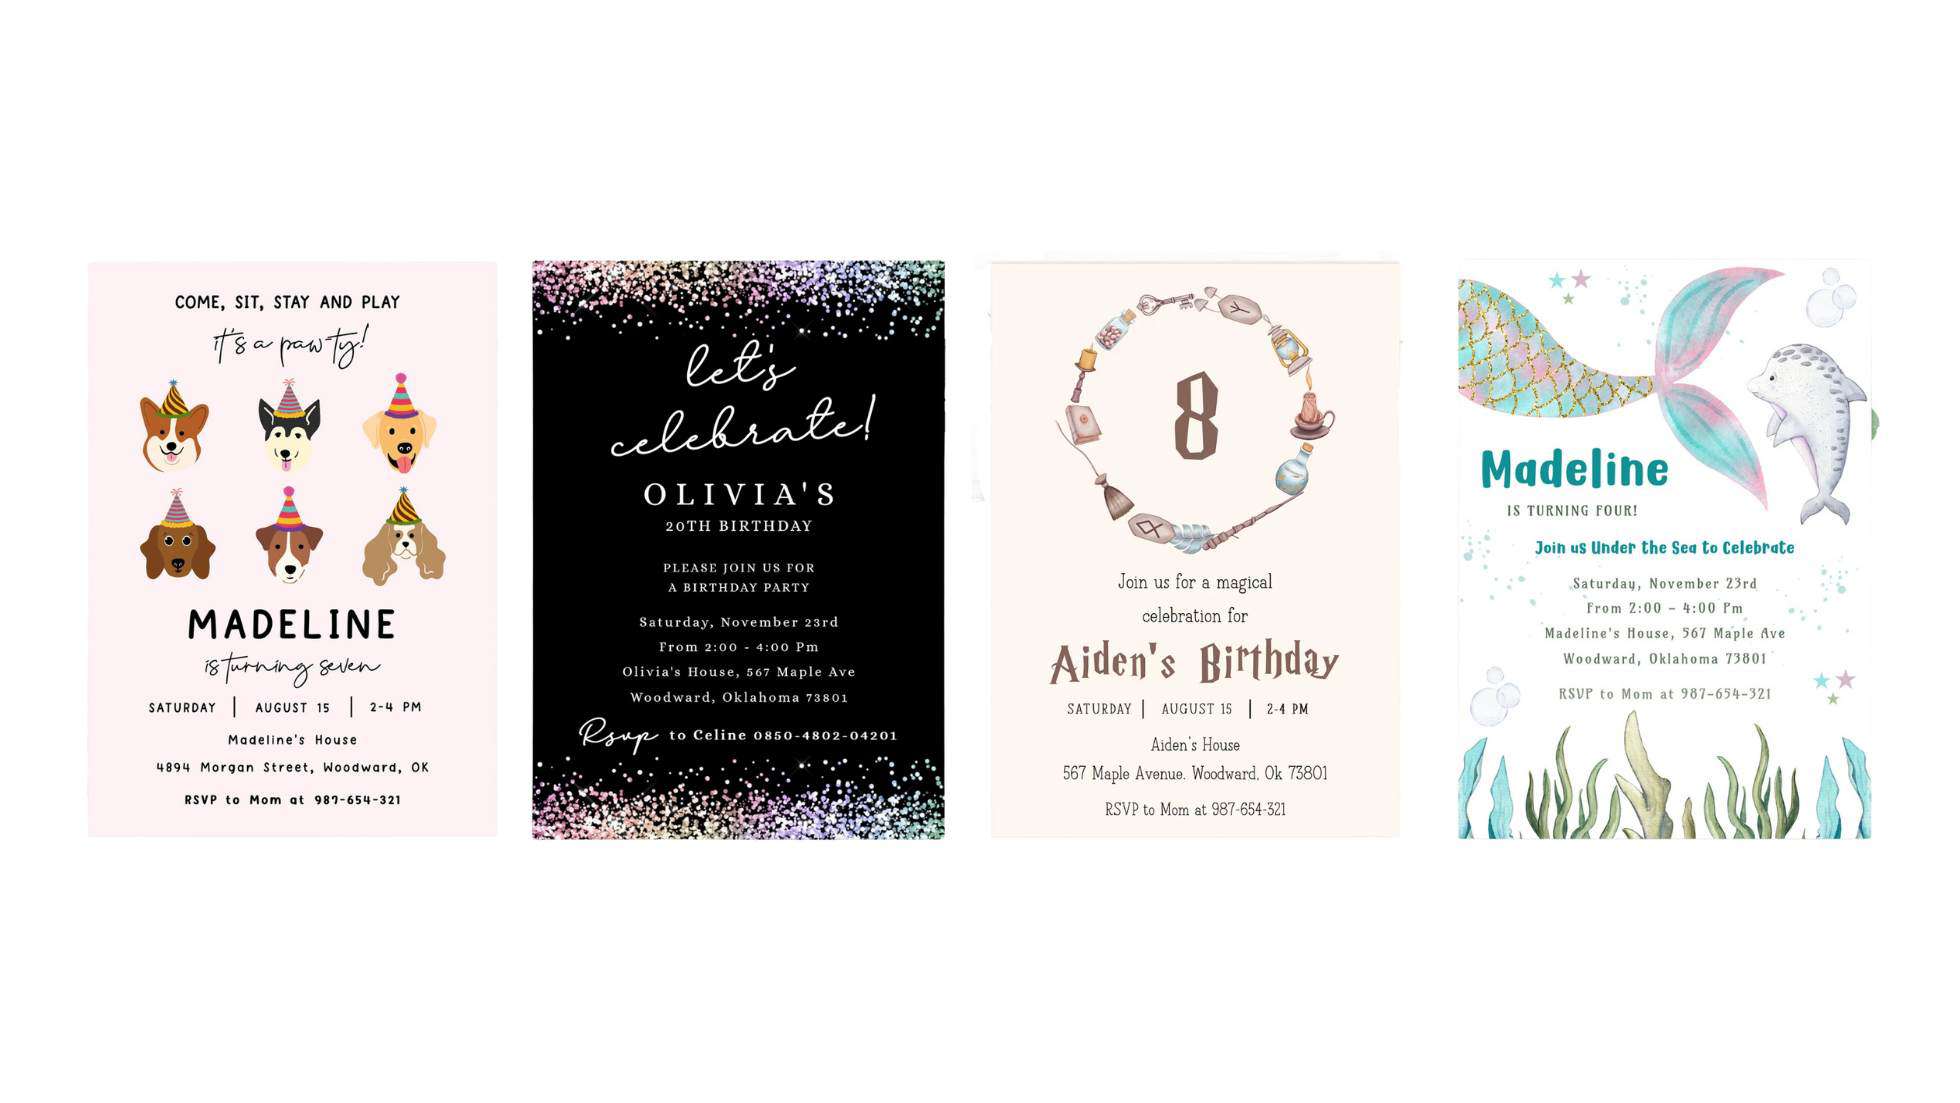 Examples of themed birthday invitation templates from Etsy